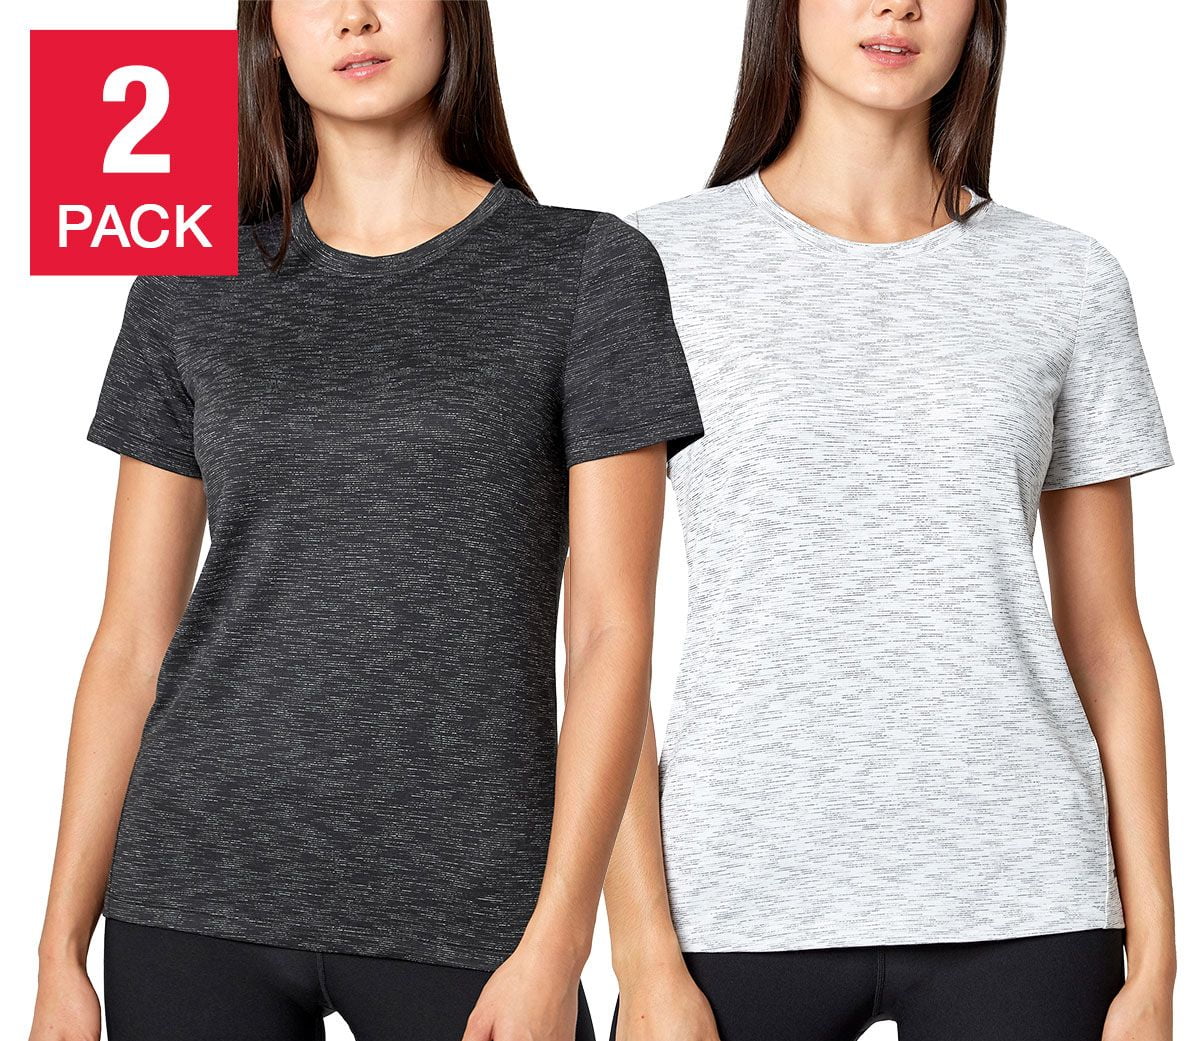 32 Degrees Heat Women's Long Sleeve Scoop Neck Shirt  Various colors  sizes 